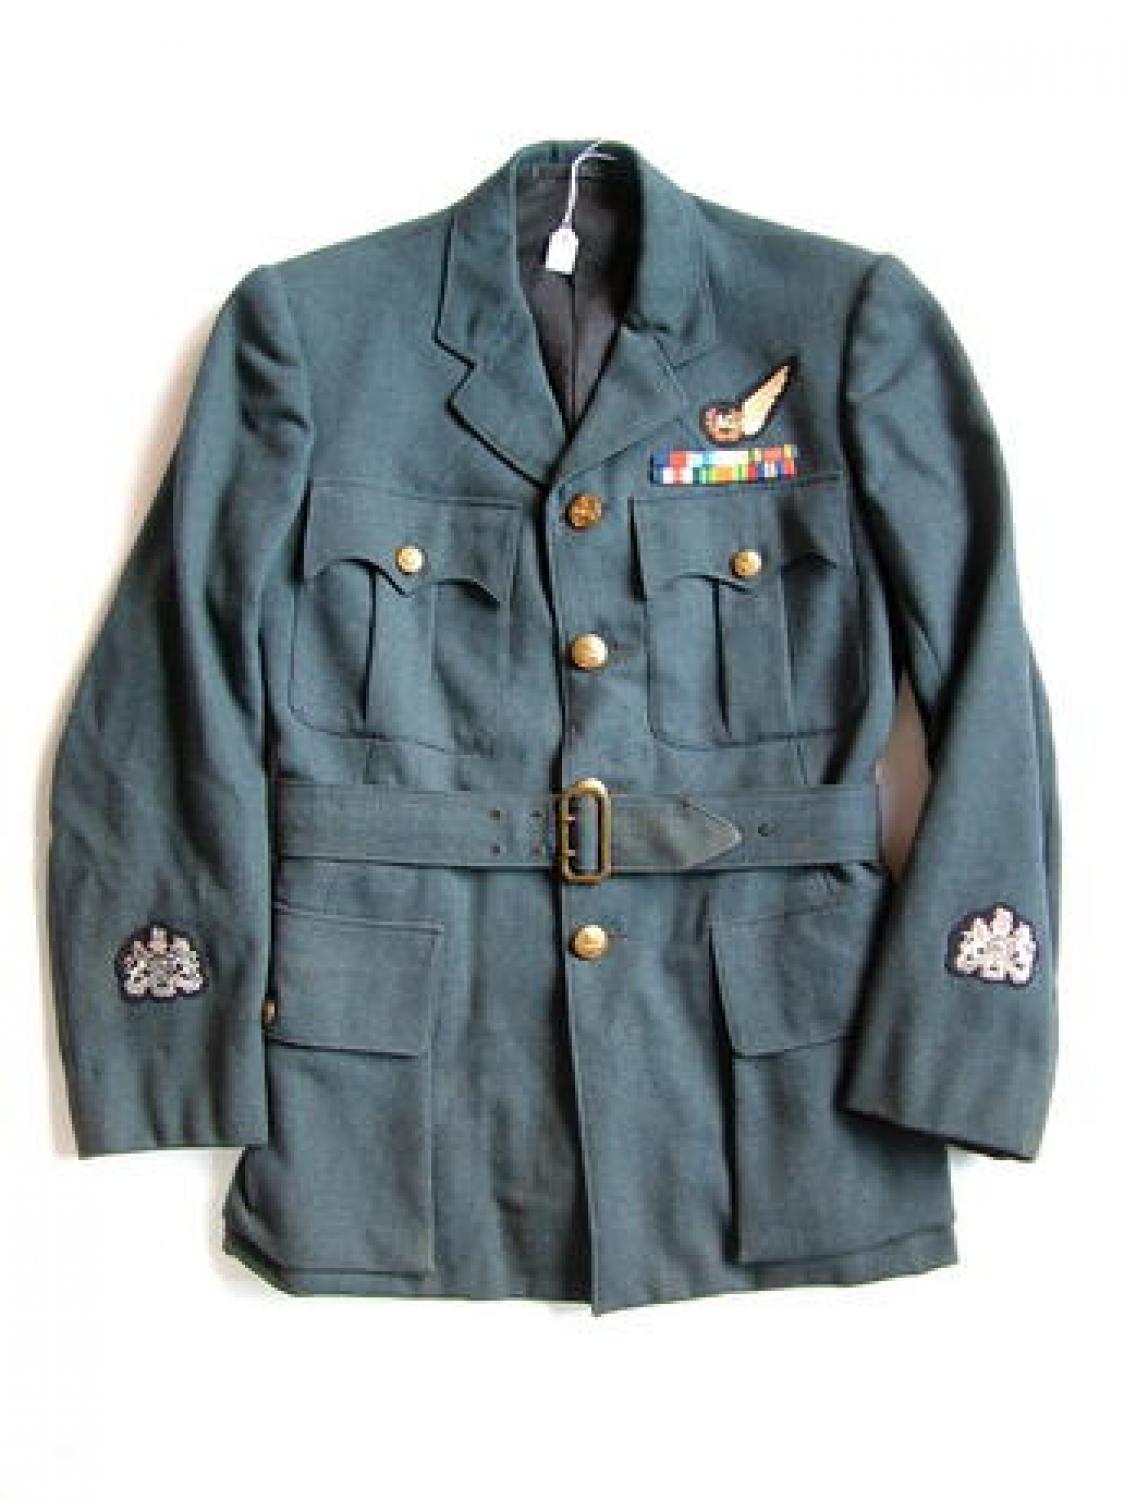 RAF Airgunner Service Dress Tunic - Named